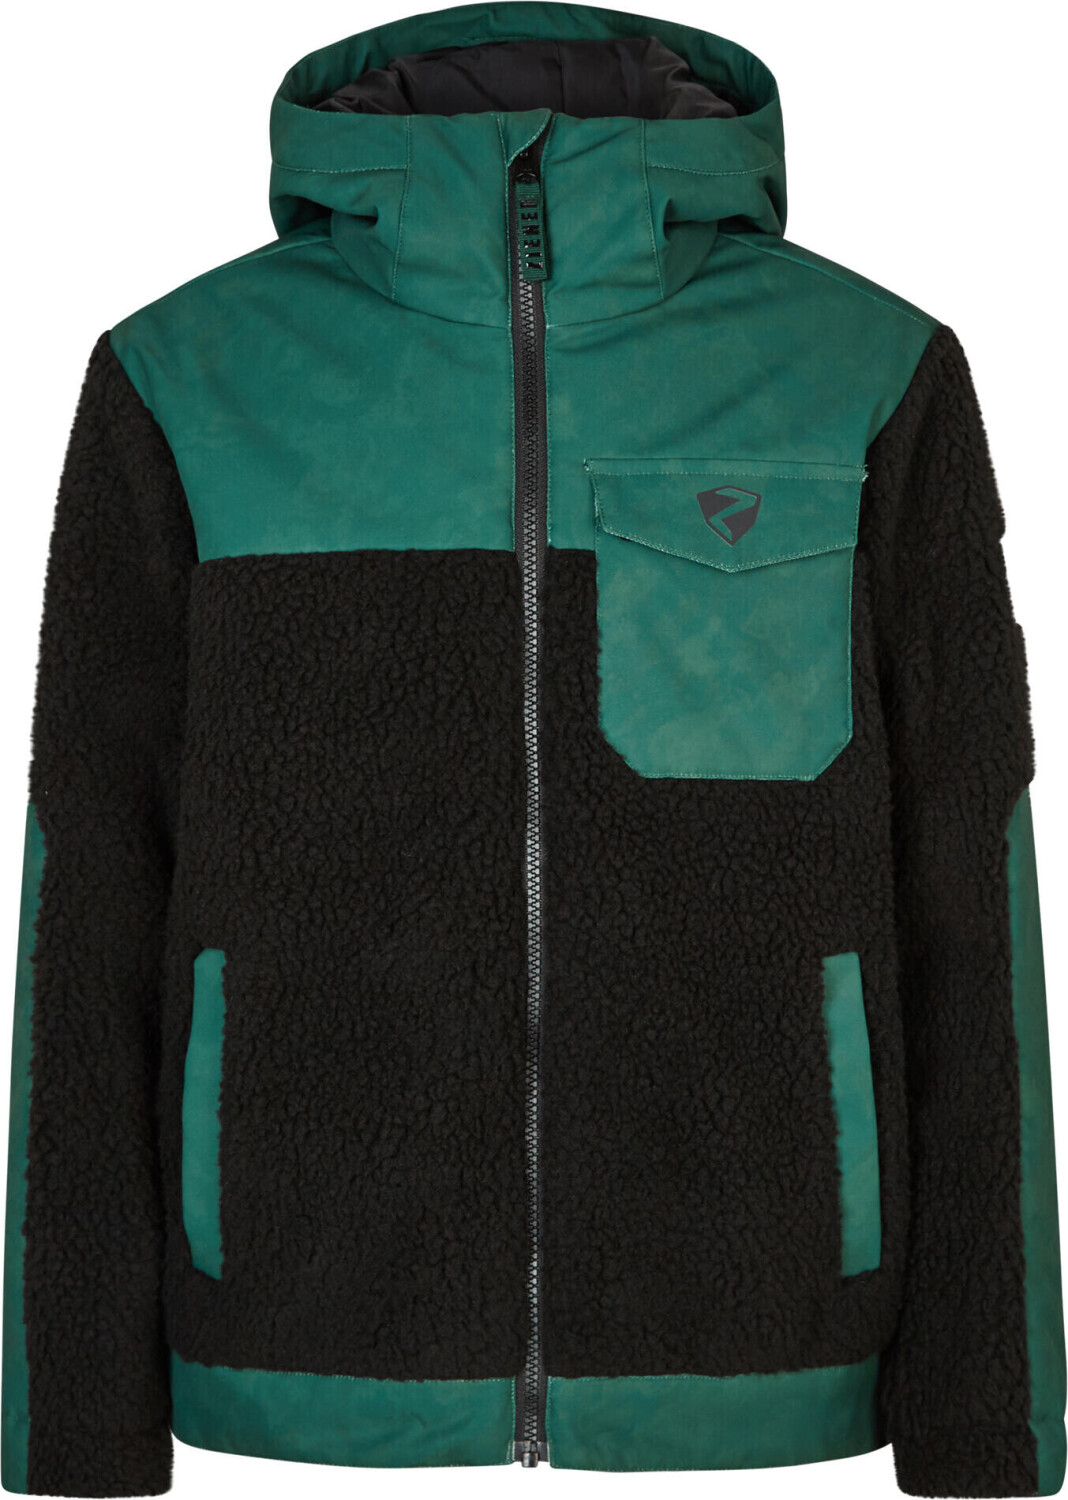 Ziener Arjun jun Jacket Ski deep green ab 64,60 € | Preisvergleich bei